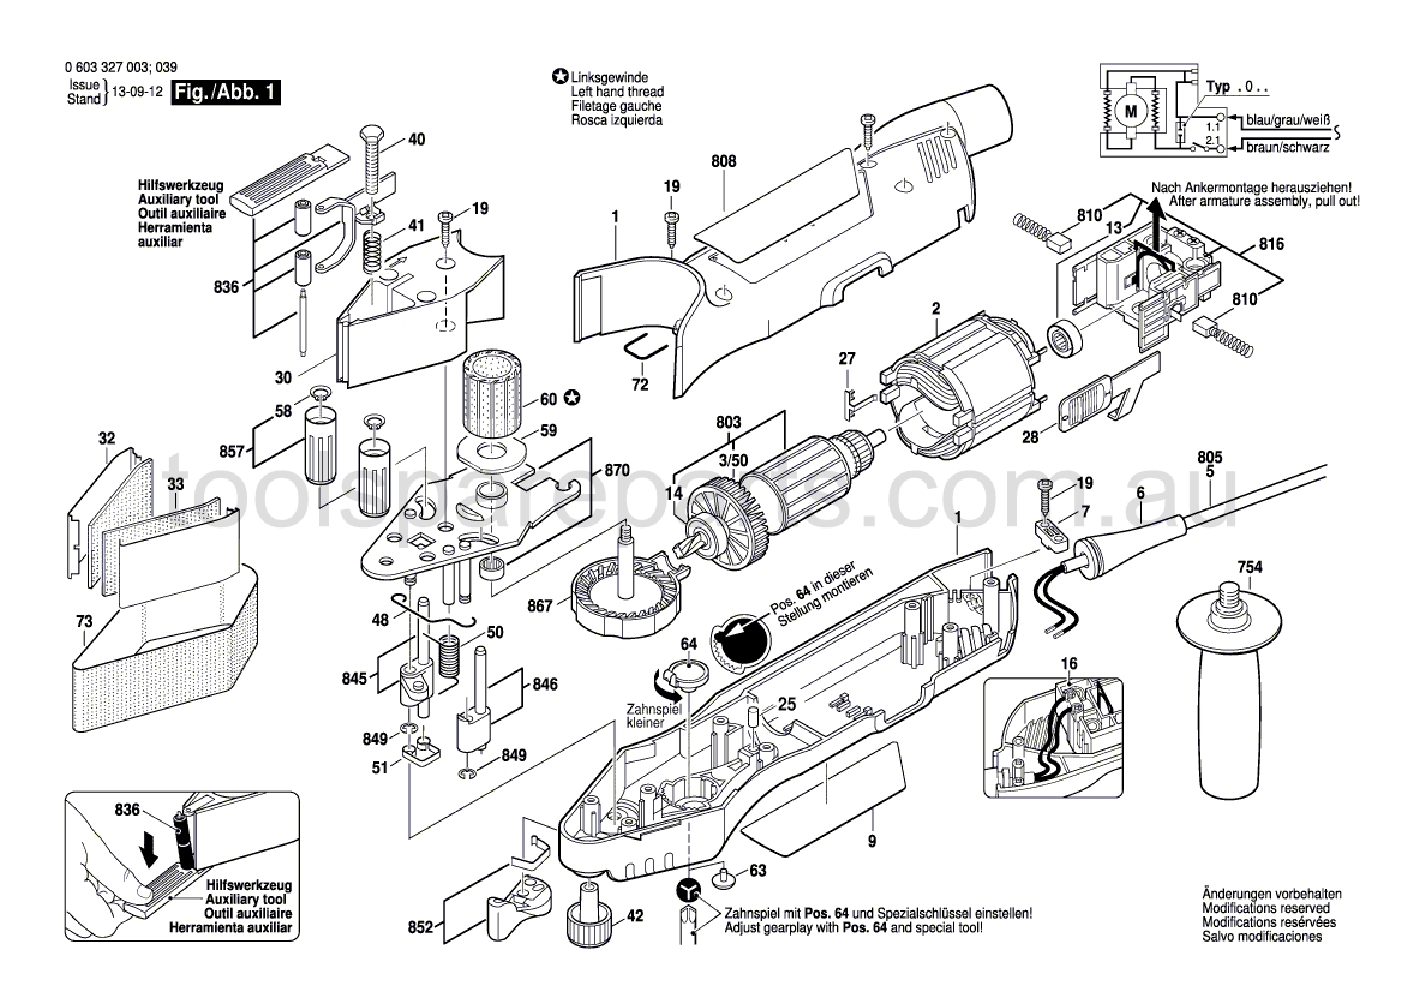 Bosch PVS 280 A 0603327037  Diagram 1